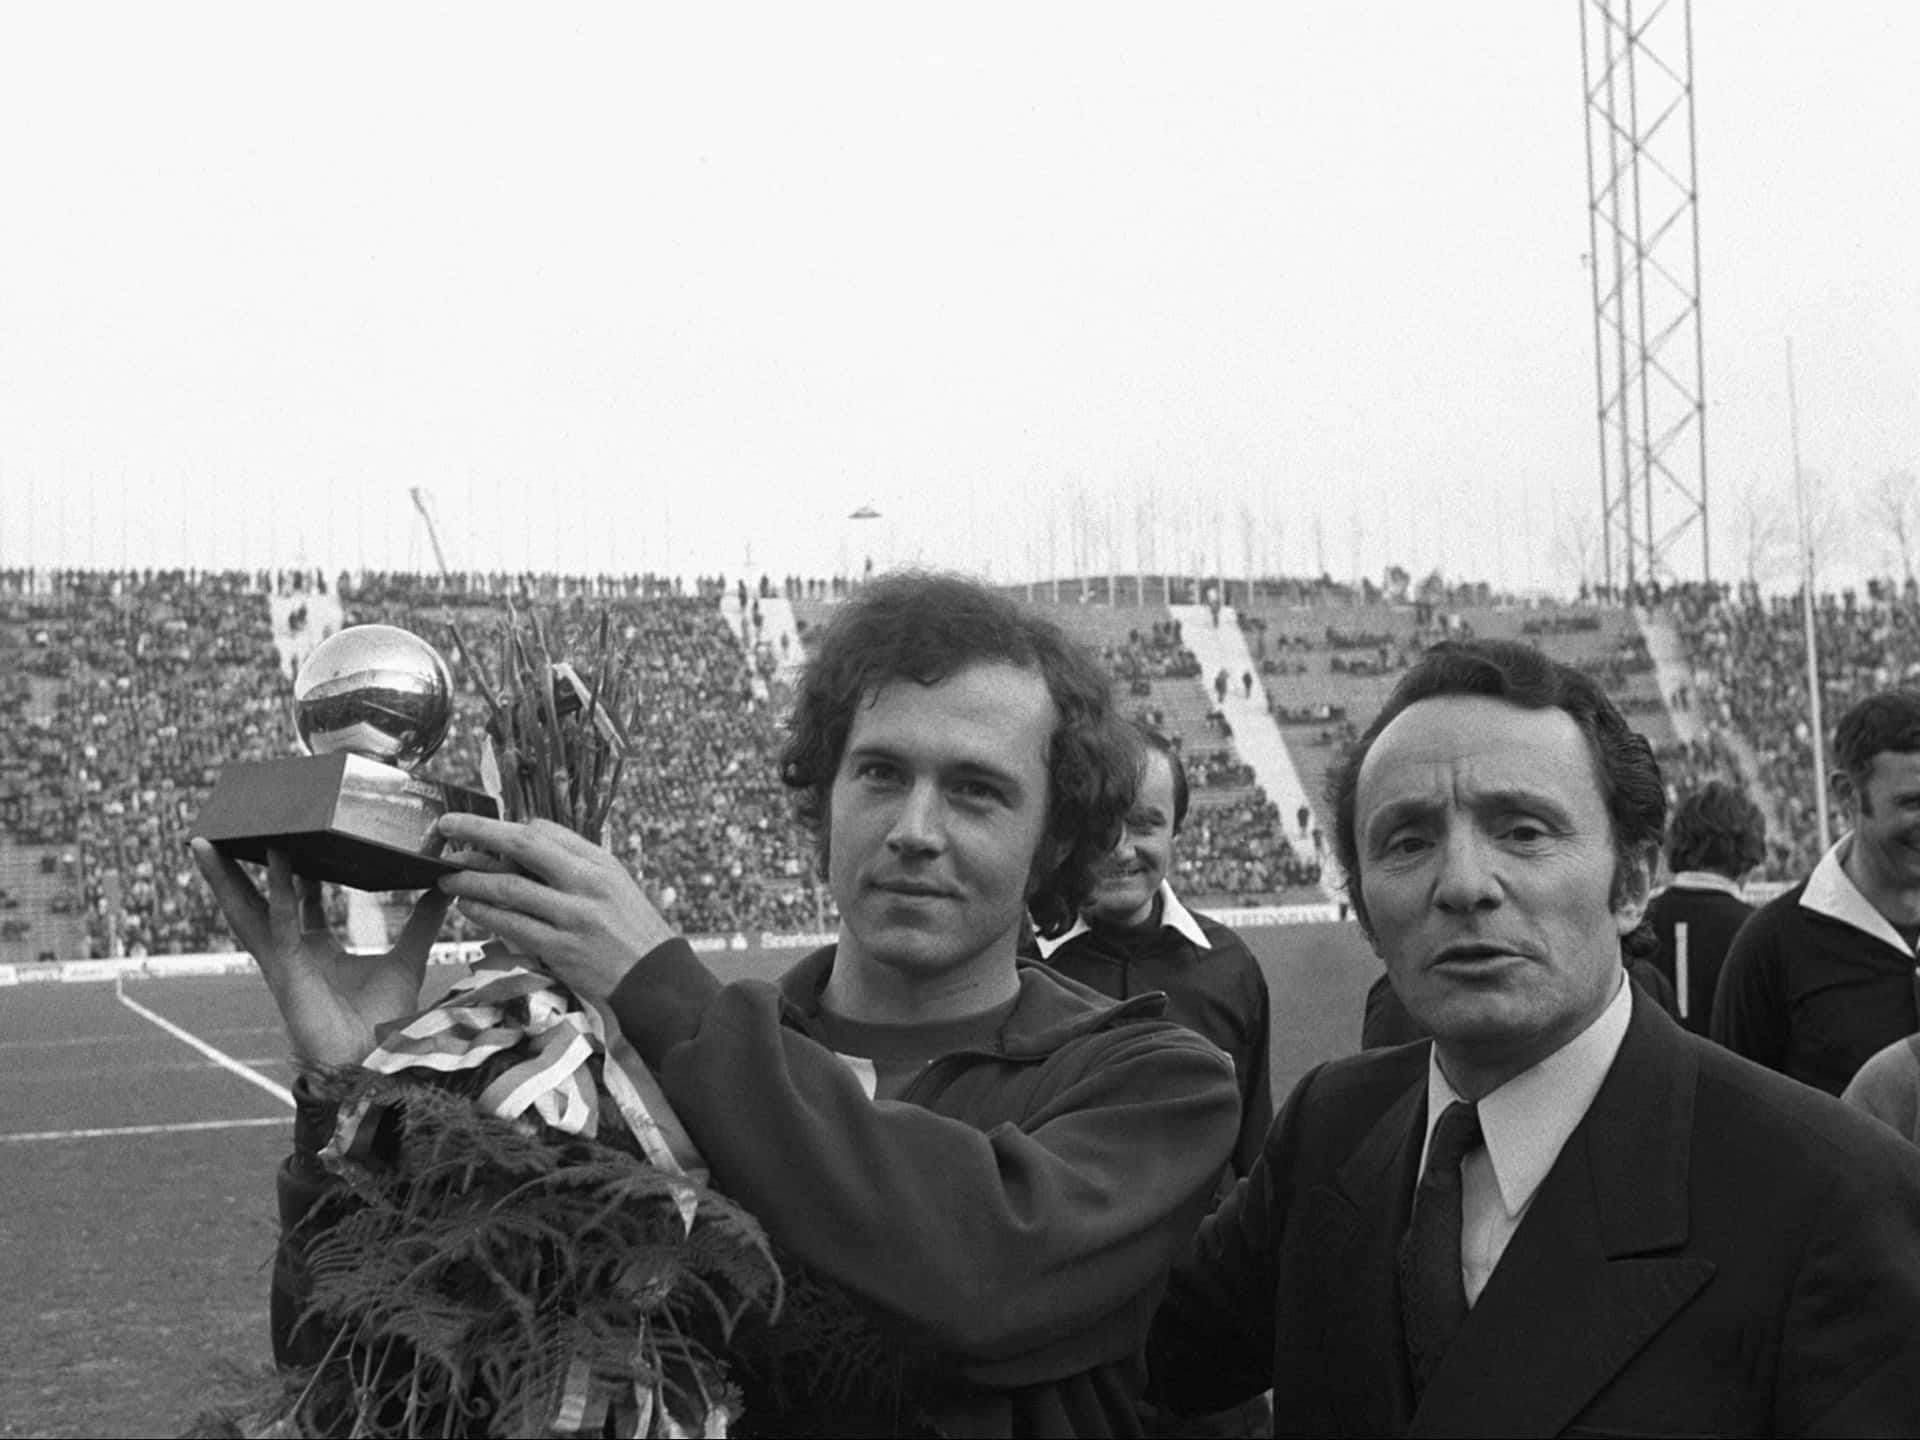 Franz Beckenbauer multi-pristjente atlet iDesktop tapet Wallpaper